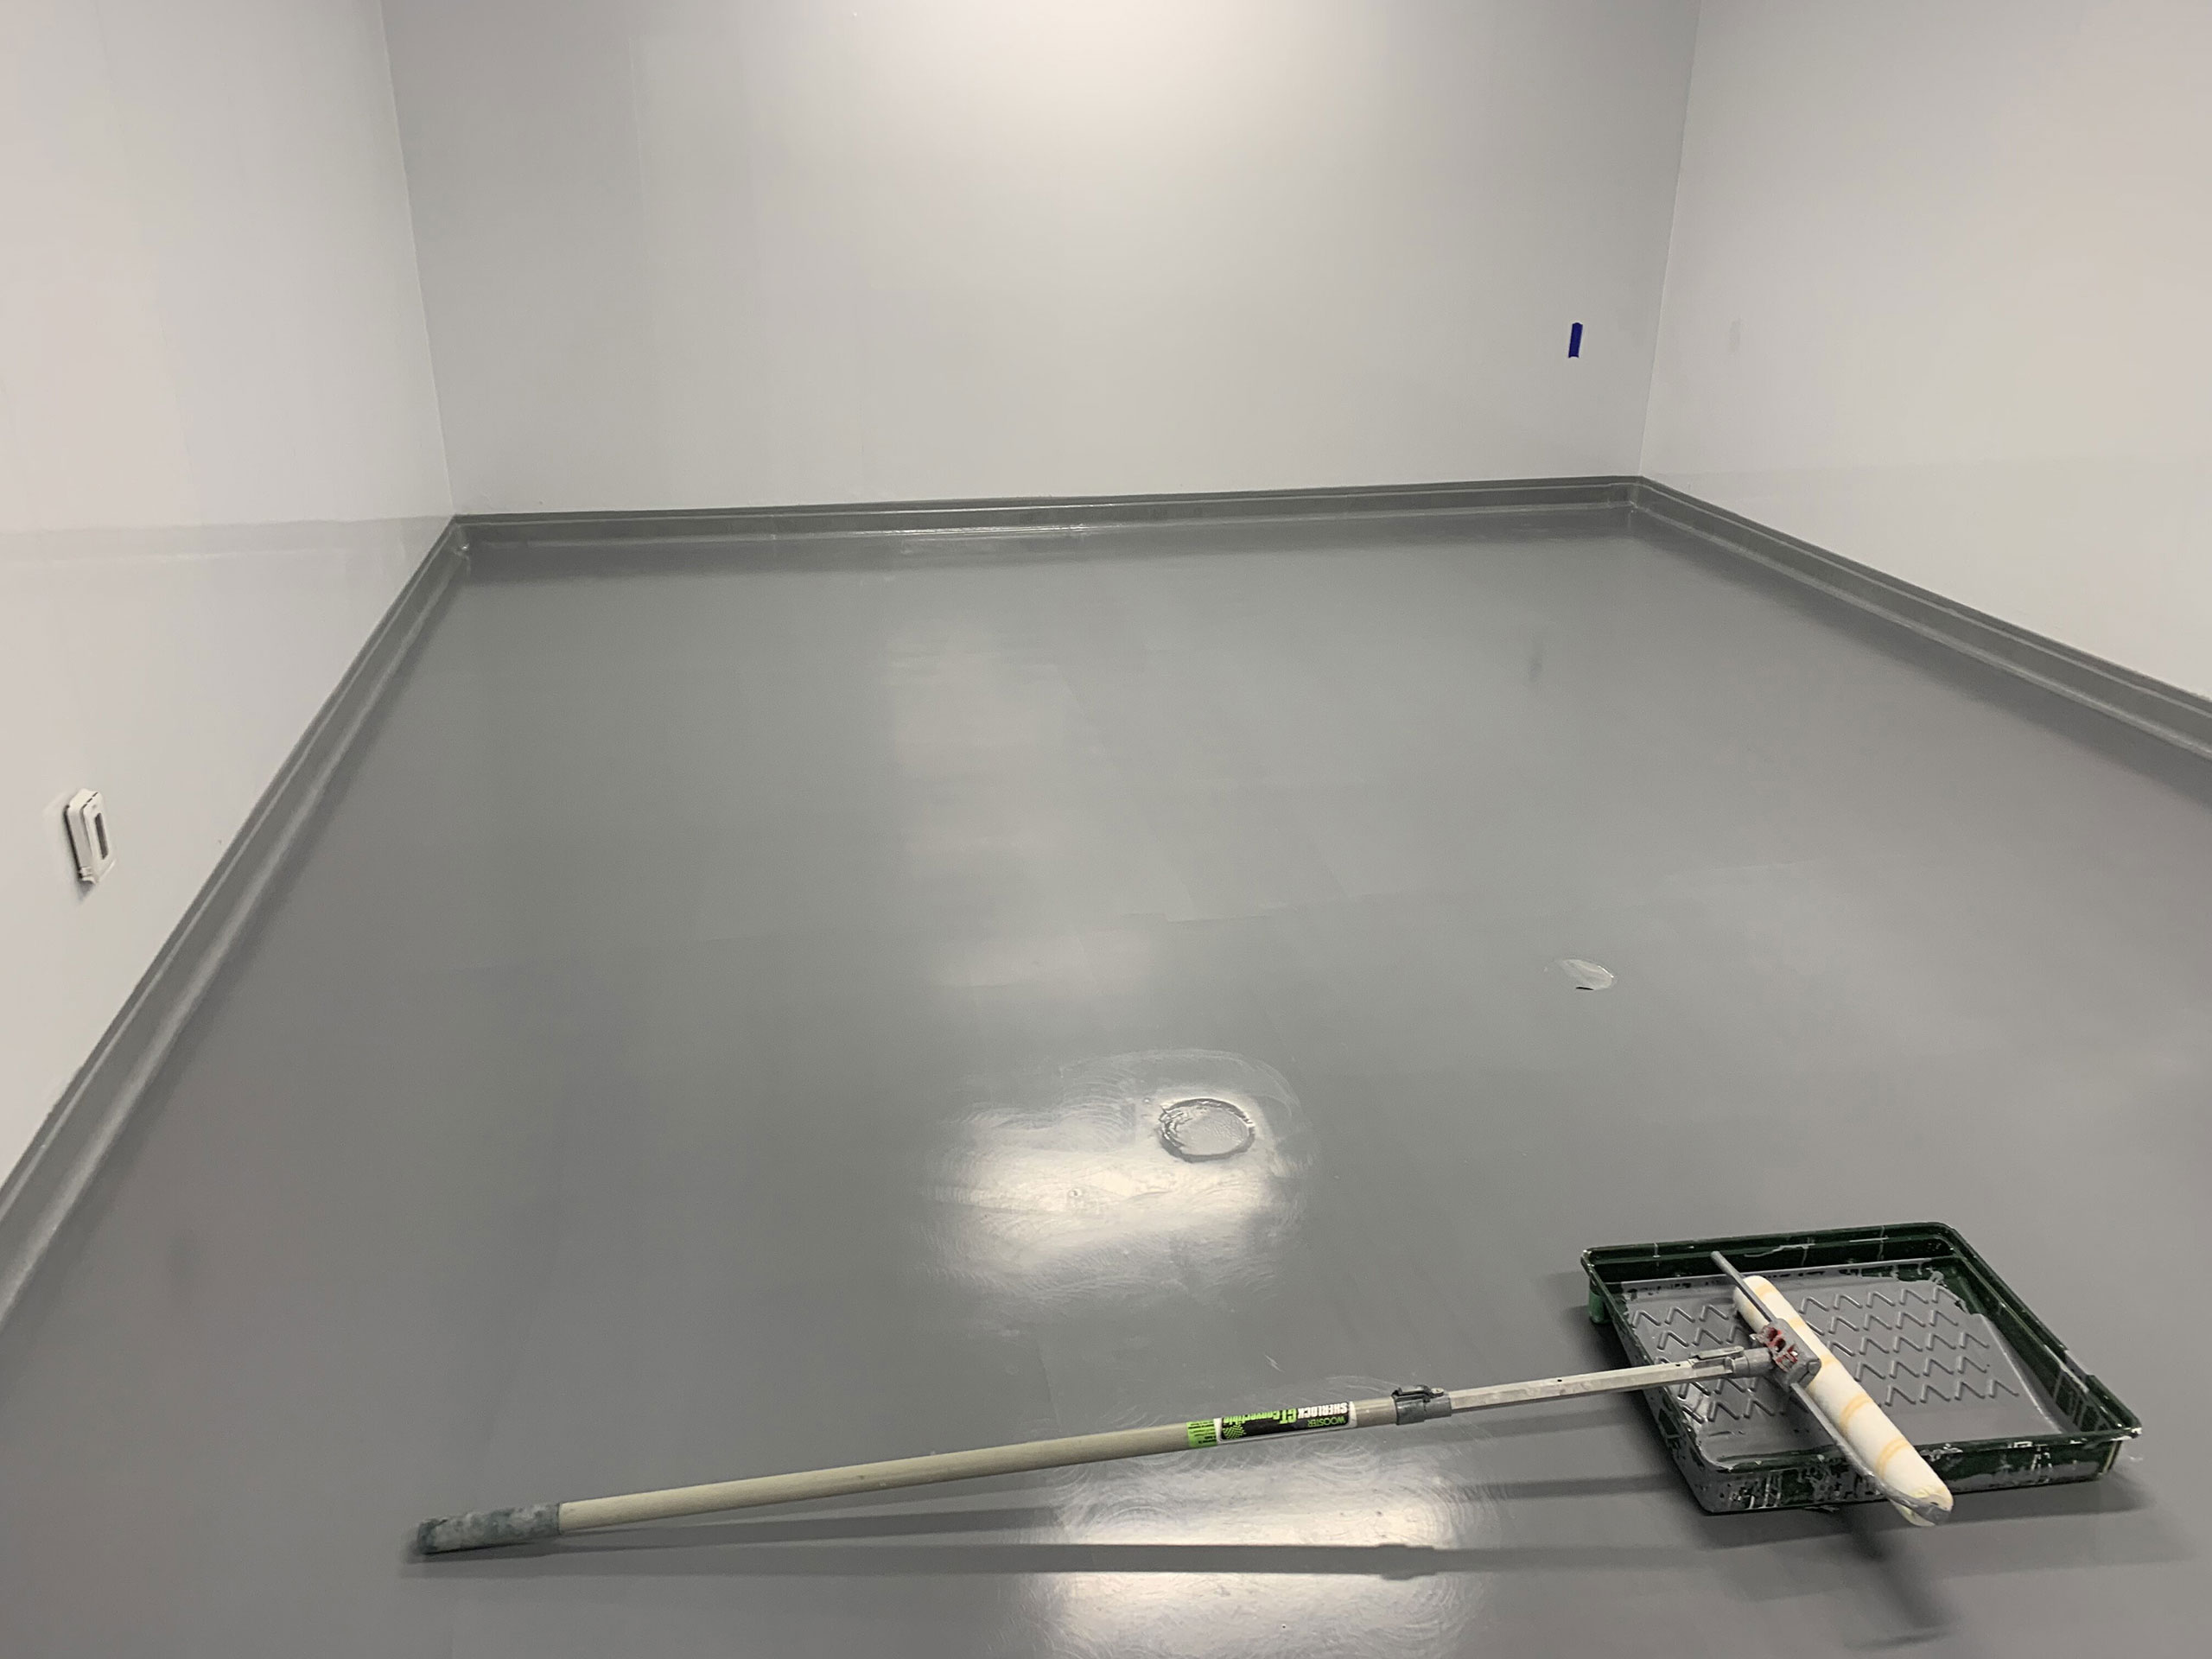 urethane floor coating